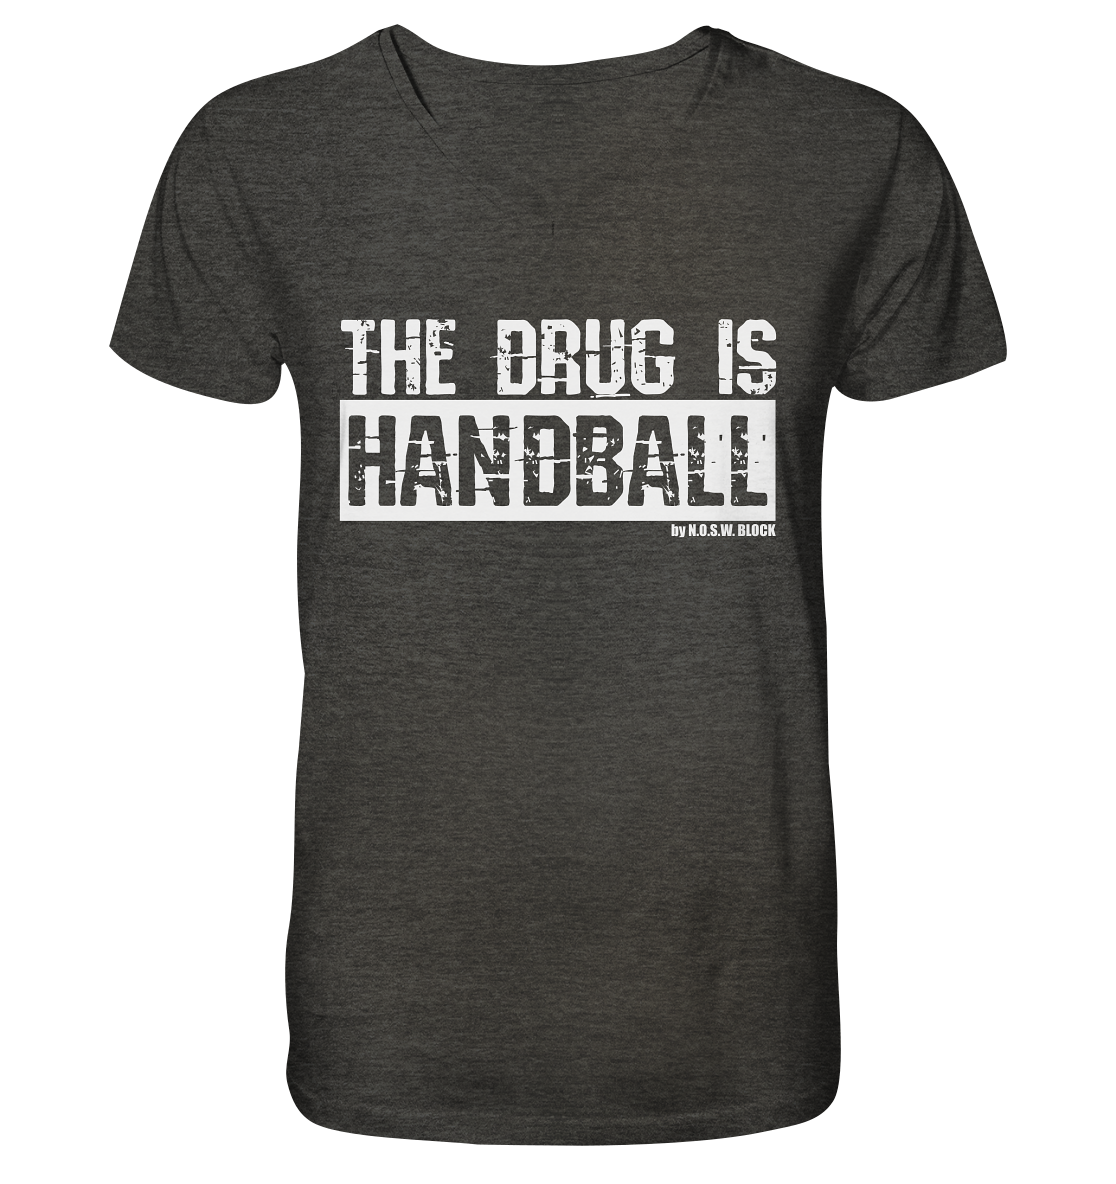 N.O.S.W. BLOCK Fanblock Shirt "THE DRUG IS HANDBALL" Männer Organic V-Neck T-Shirt dark heather grau